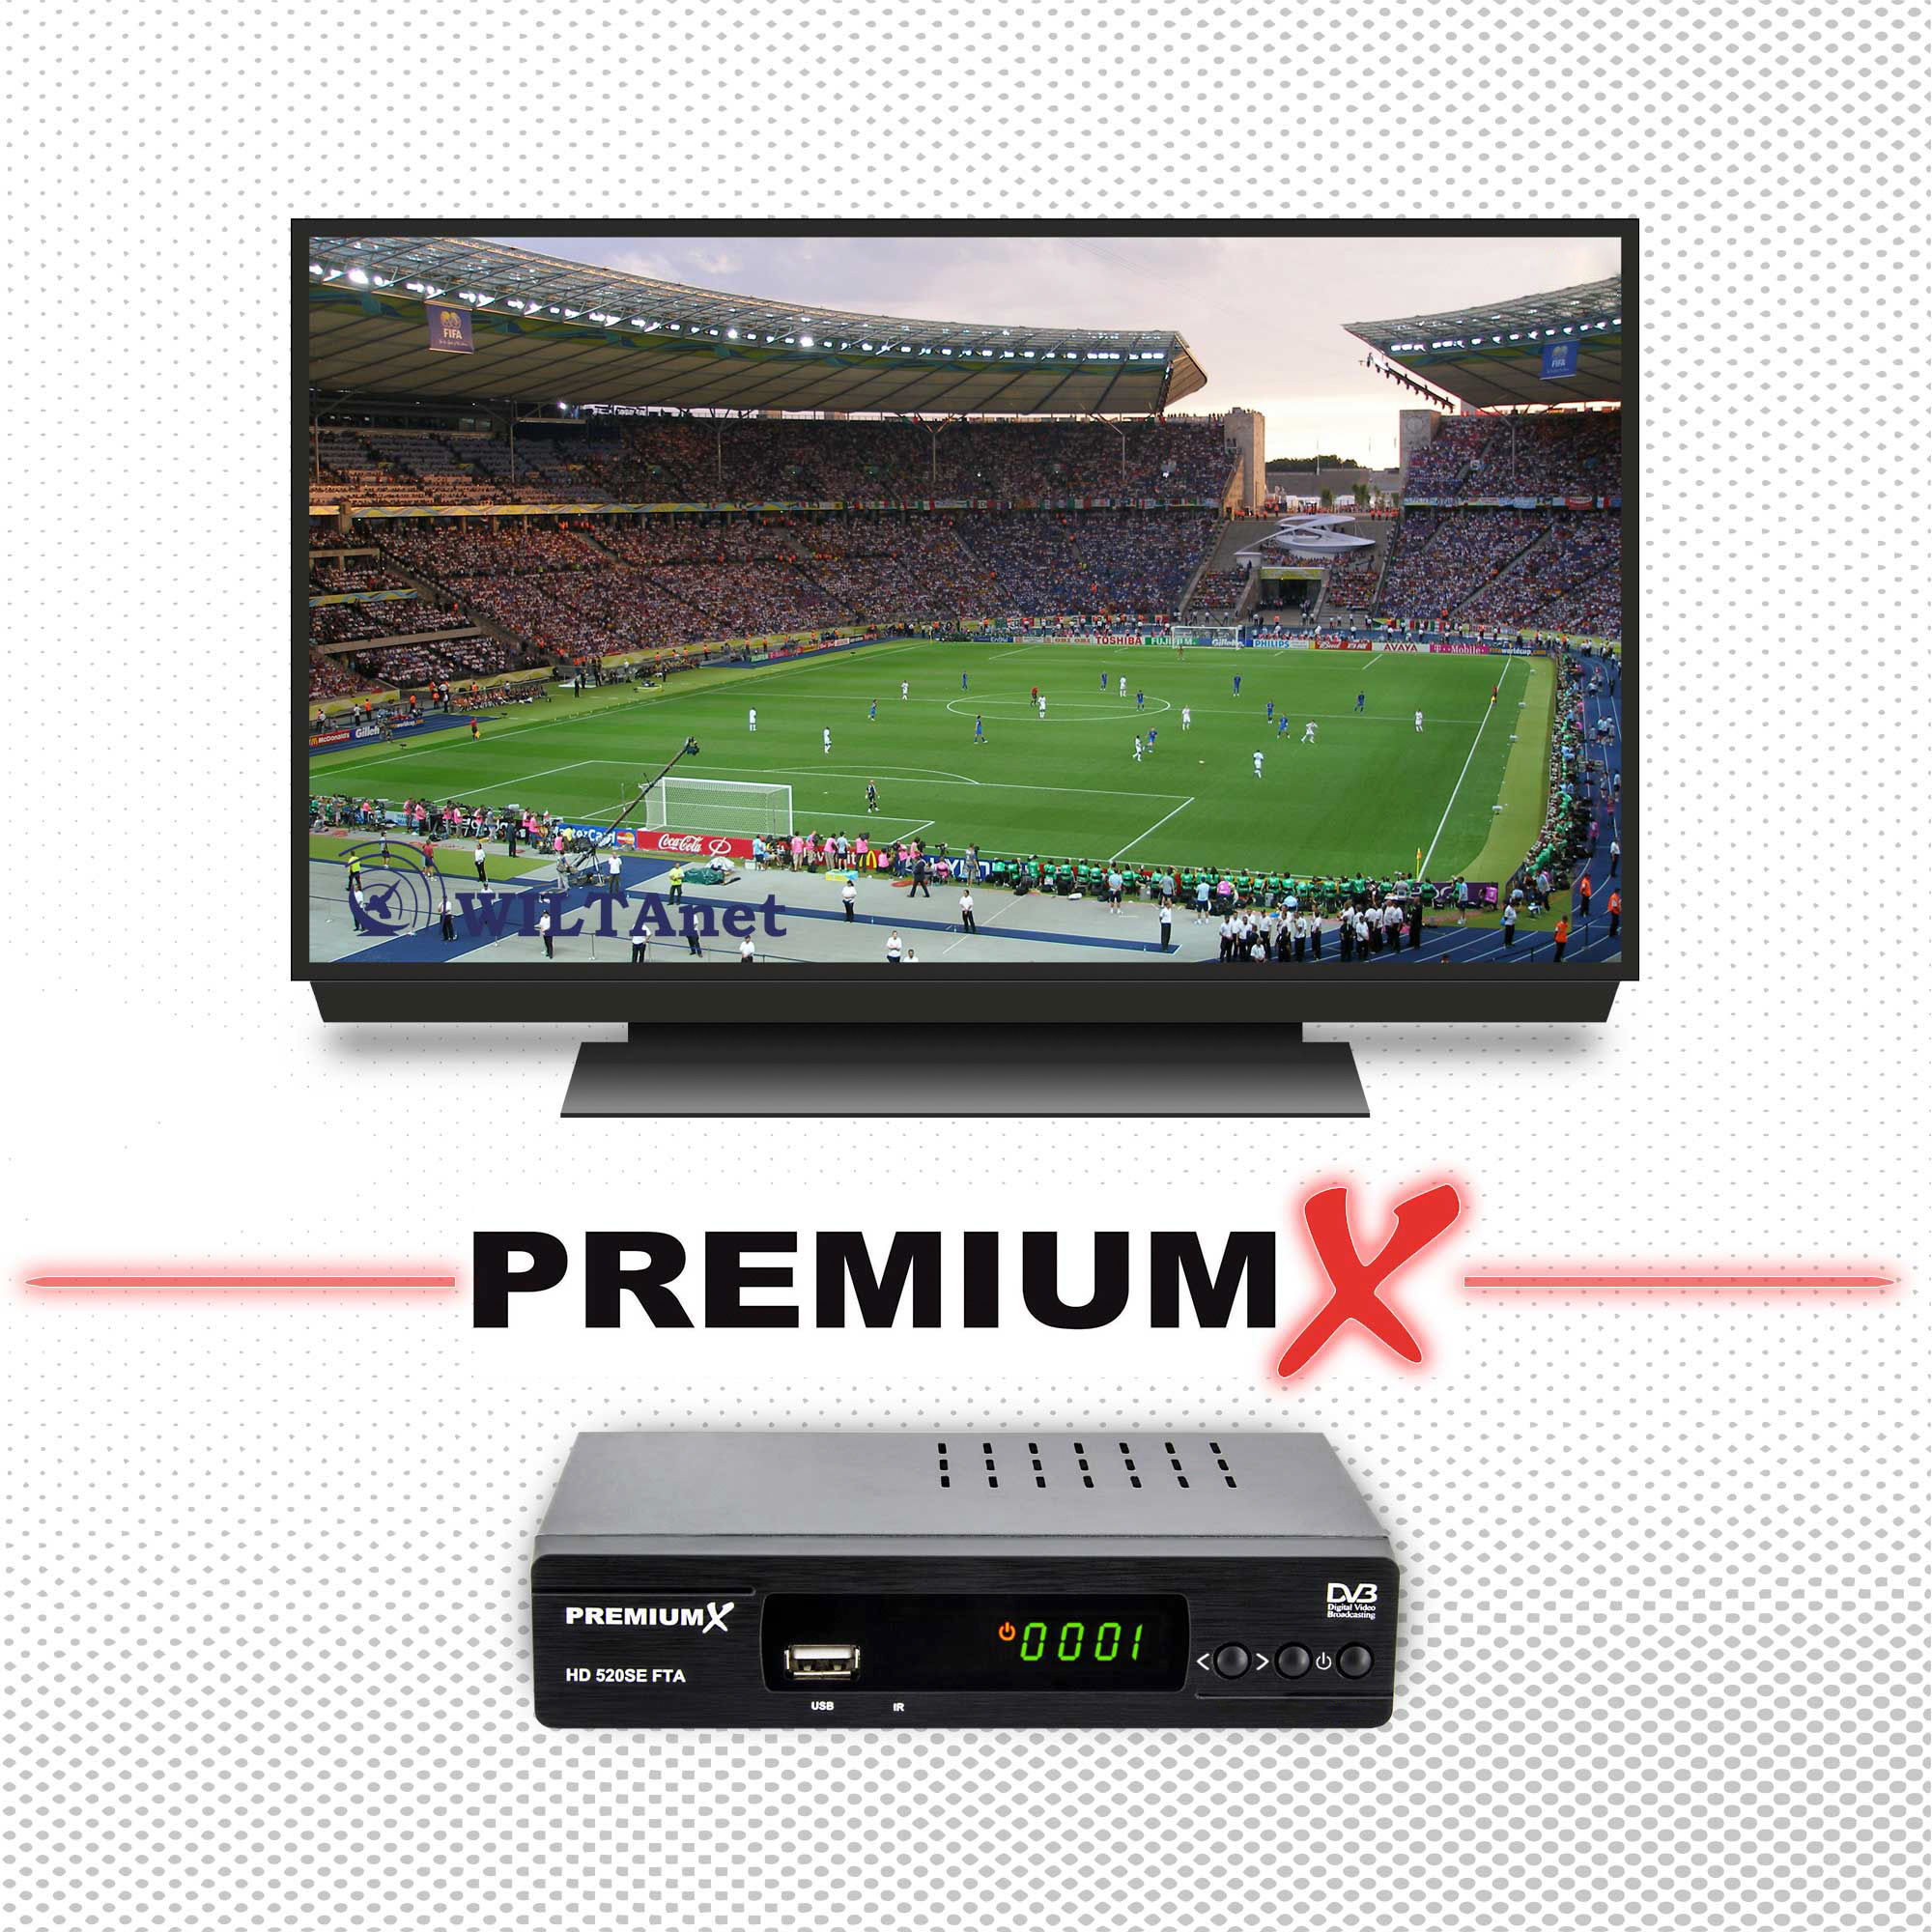 PREMIUMX HD (Schwarz) USB SCART SAT Receiver FullHD DVB-S2 FTA HD 520SE Sat Receiver Digital HDMI